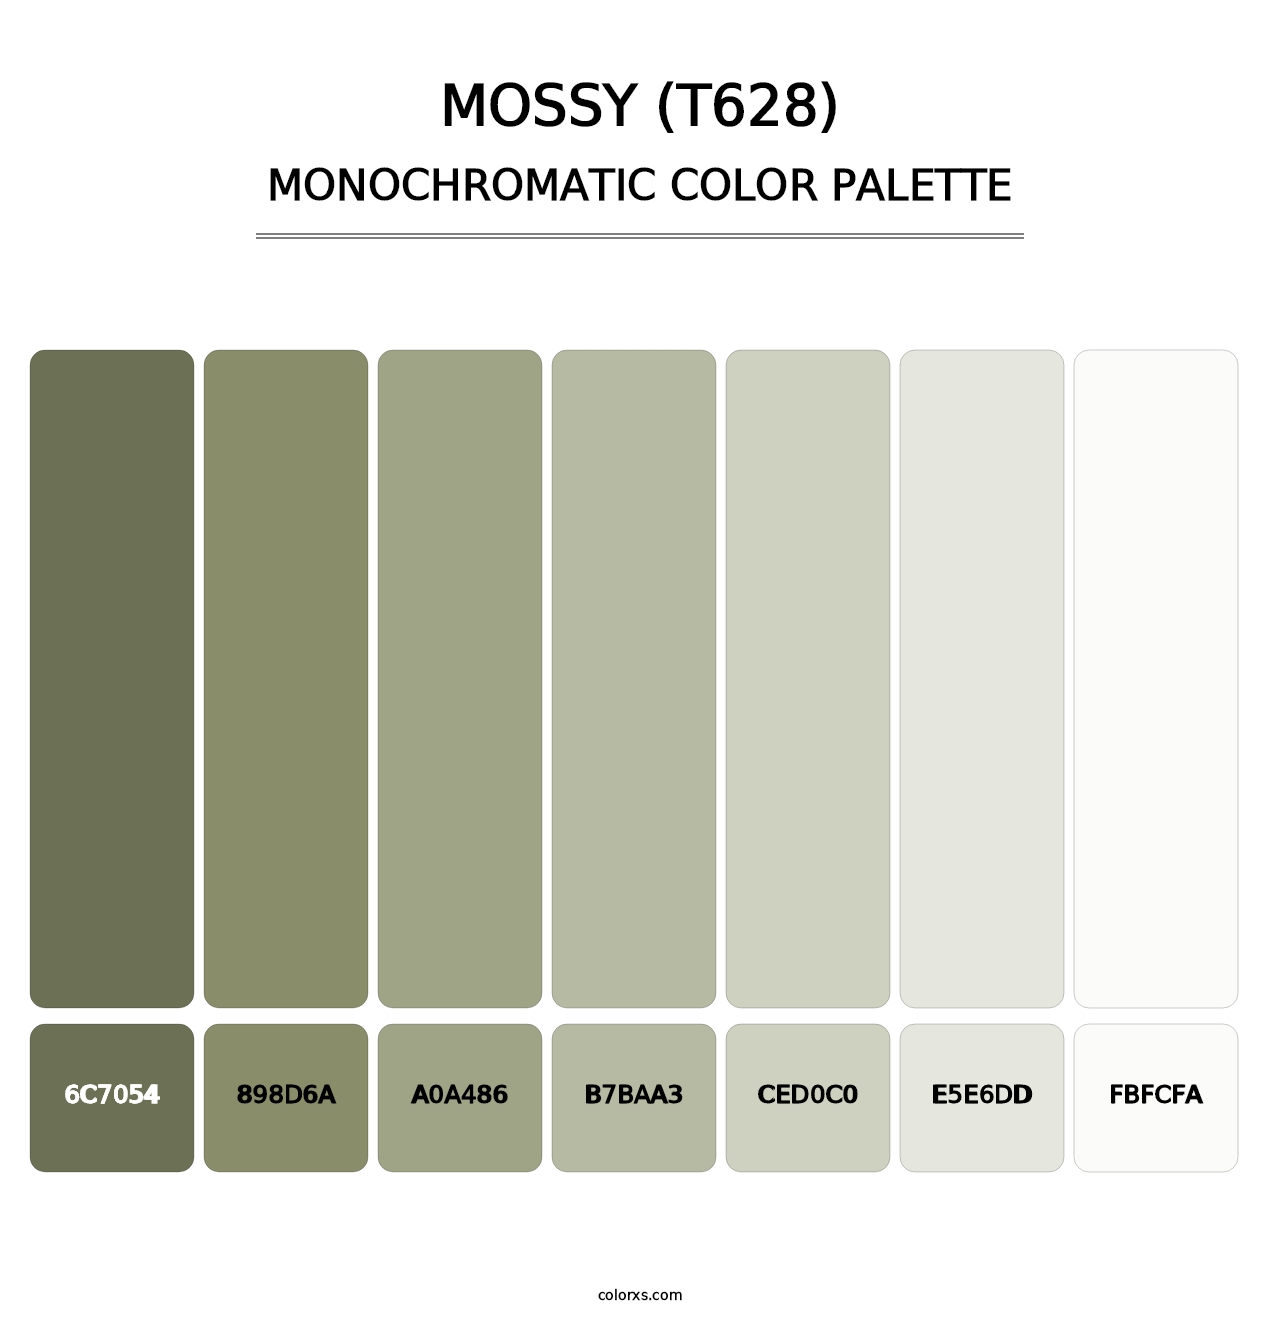 Mossy (T628) - Monochromatic Color Palette